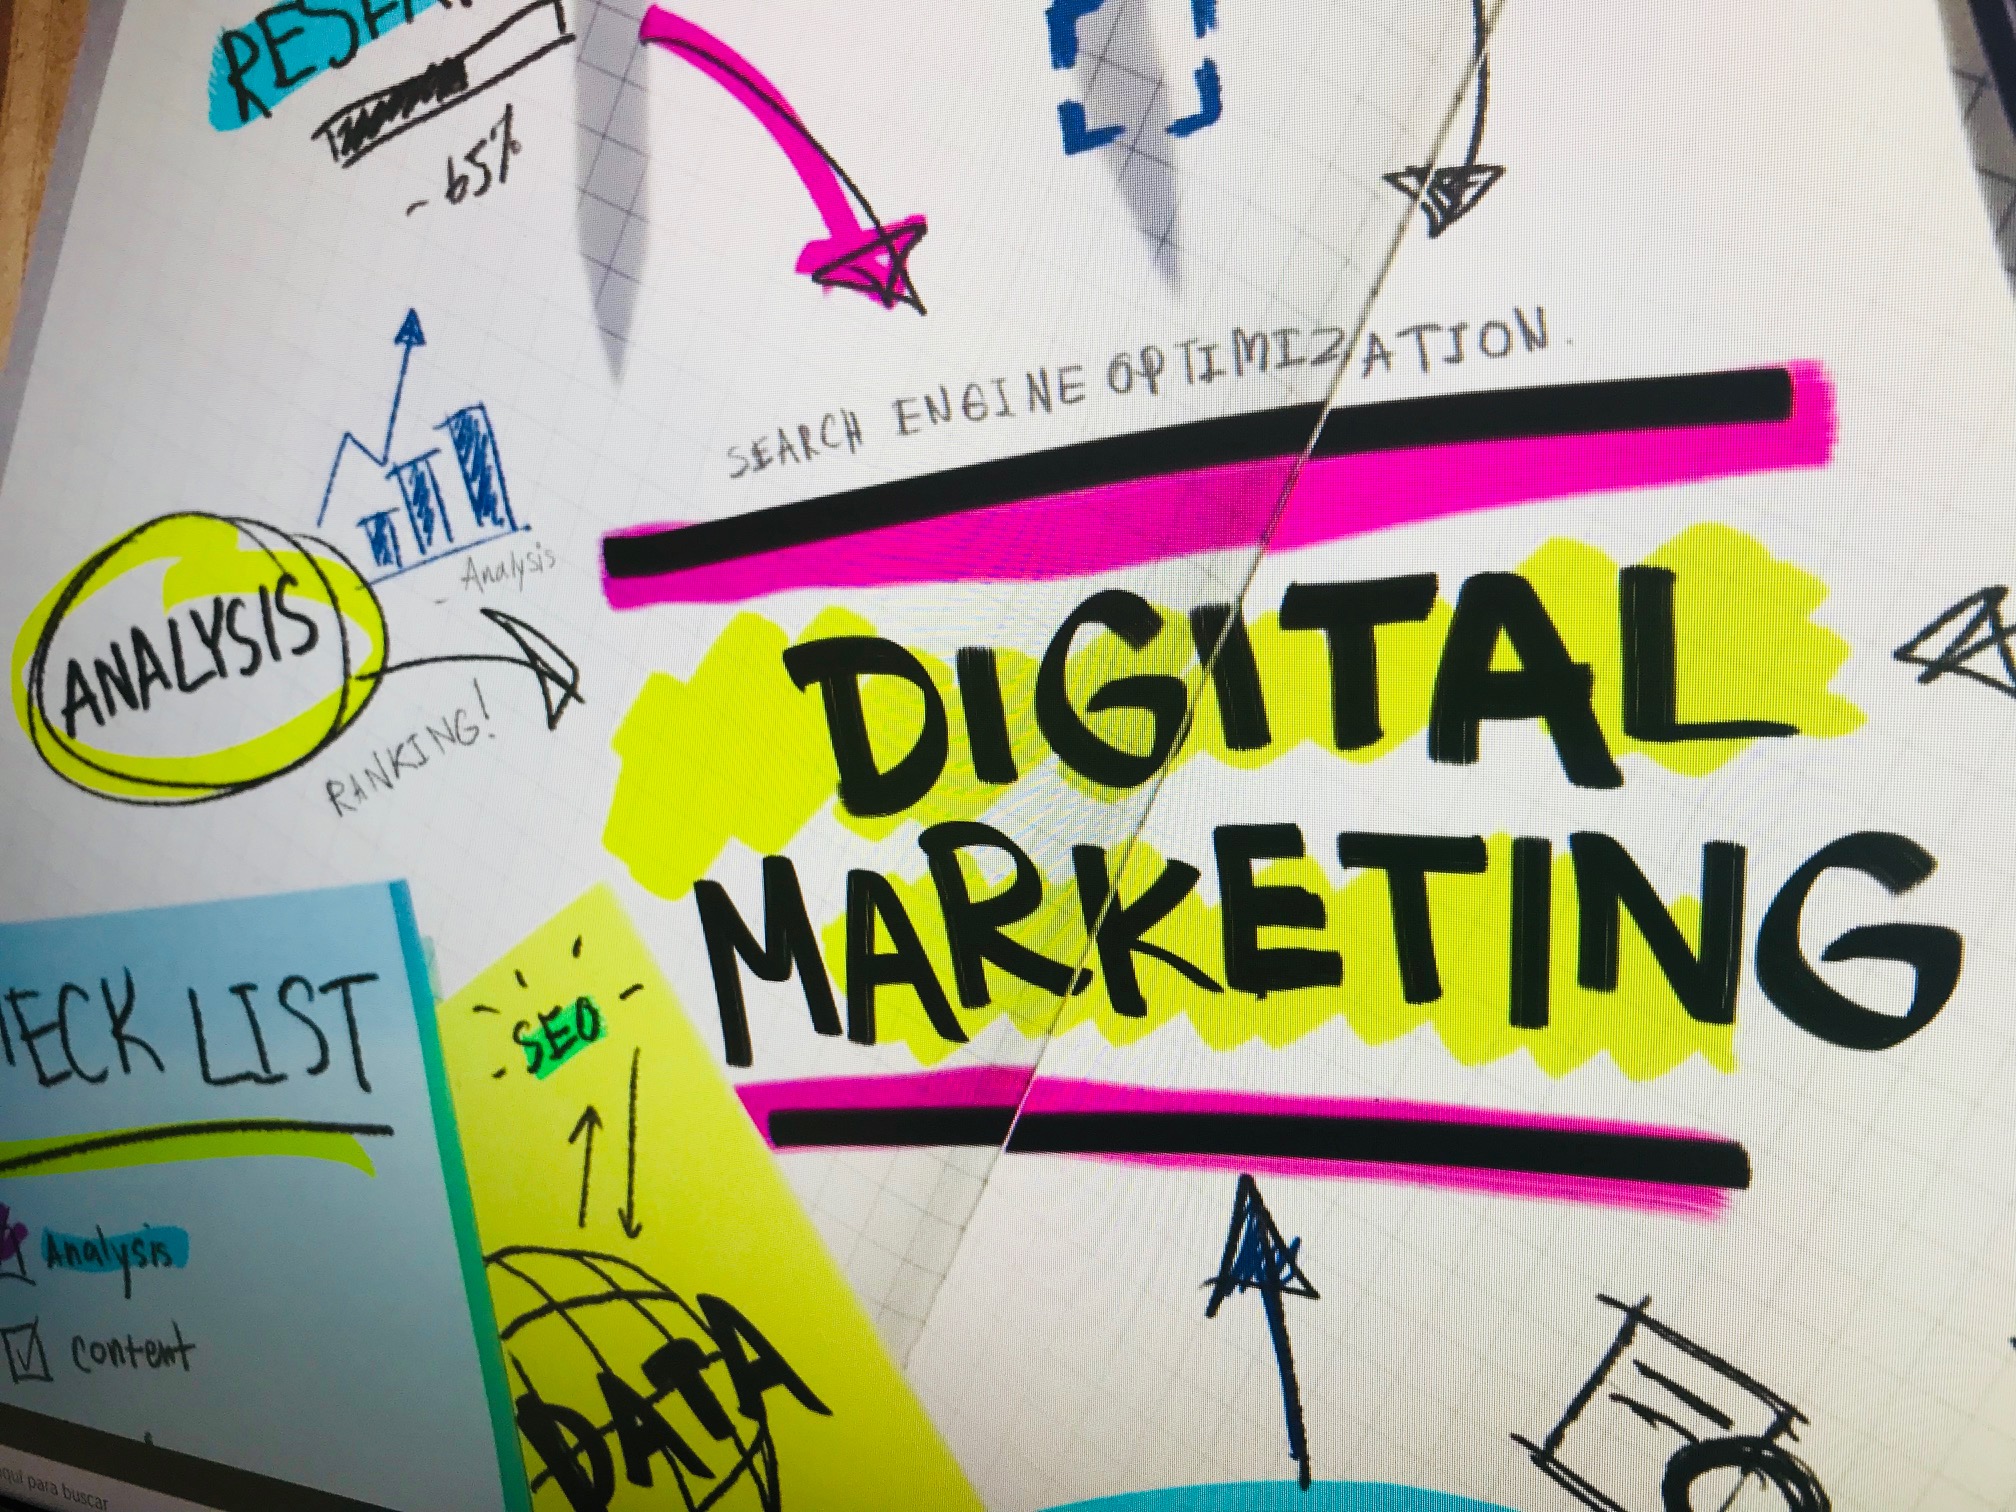 Importancia del marketing digital